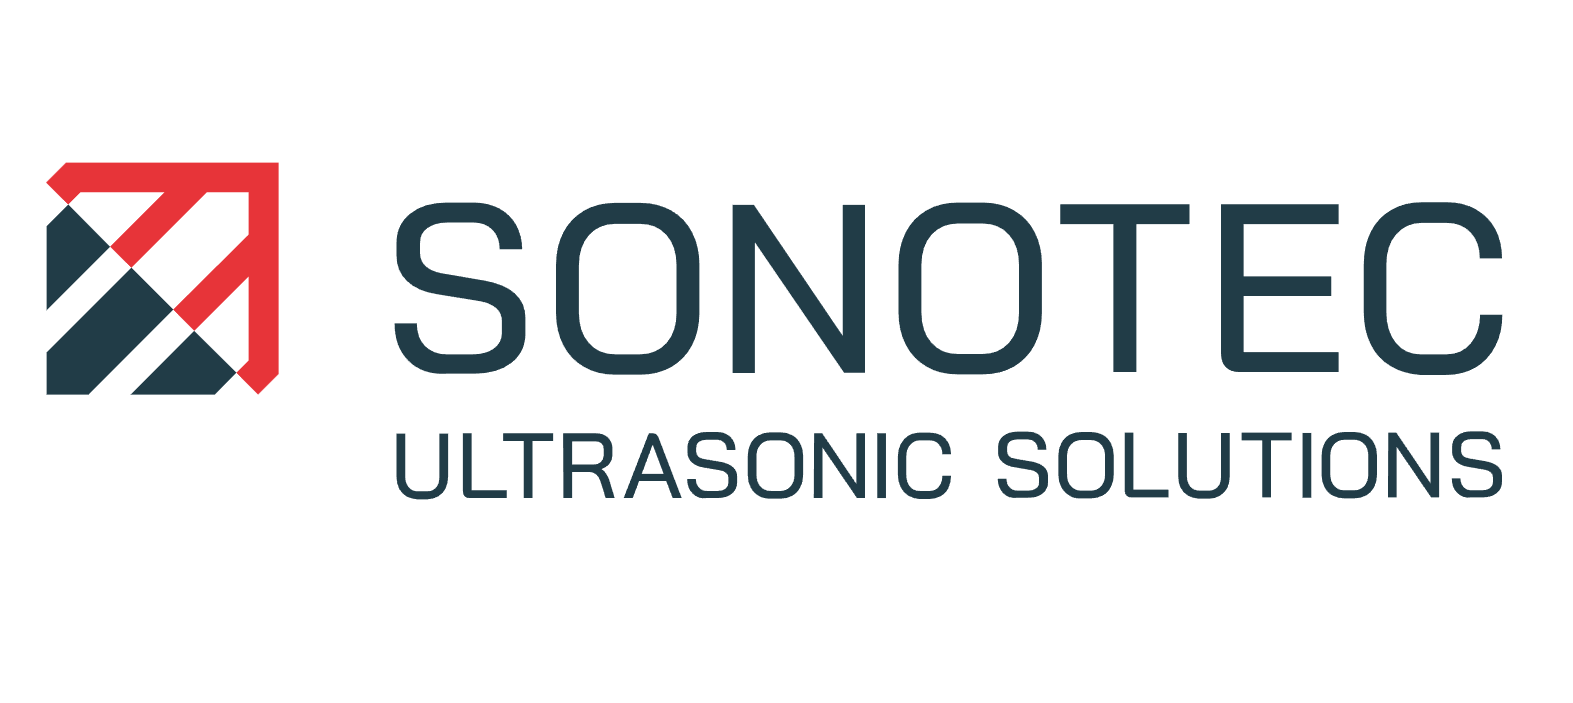 Logo SONOTEC GmbH